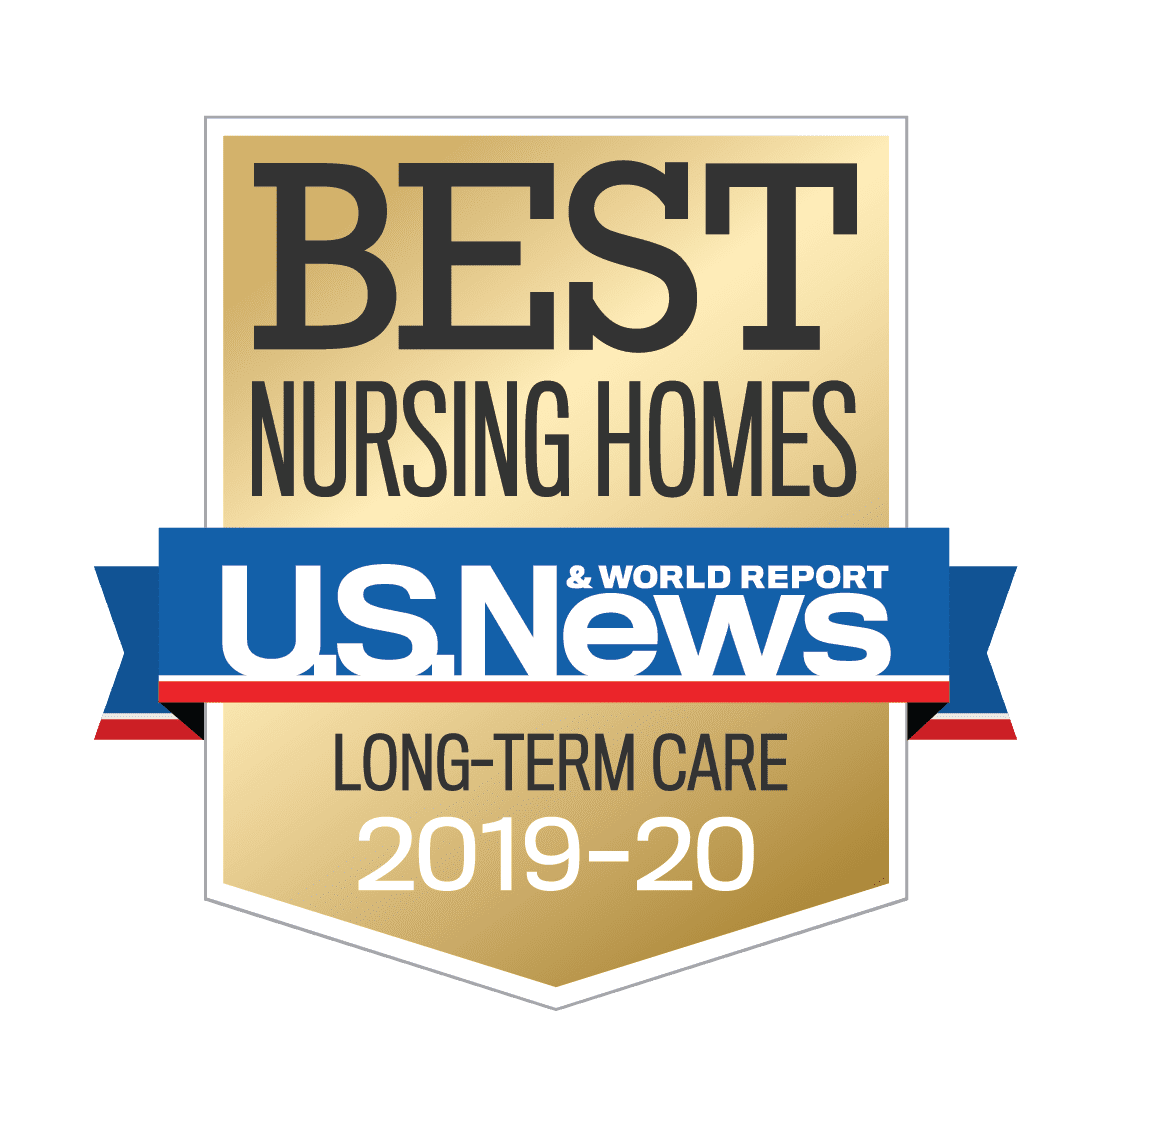 nursing-home-care-at-st-john-s-rochester-ny